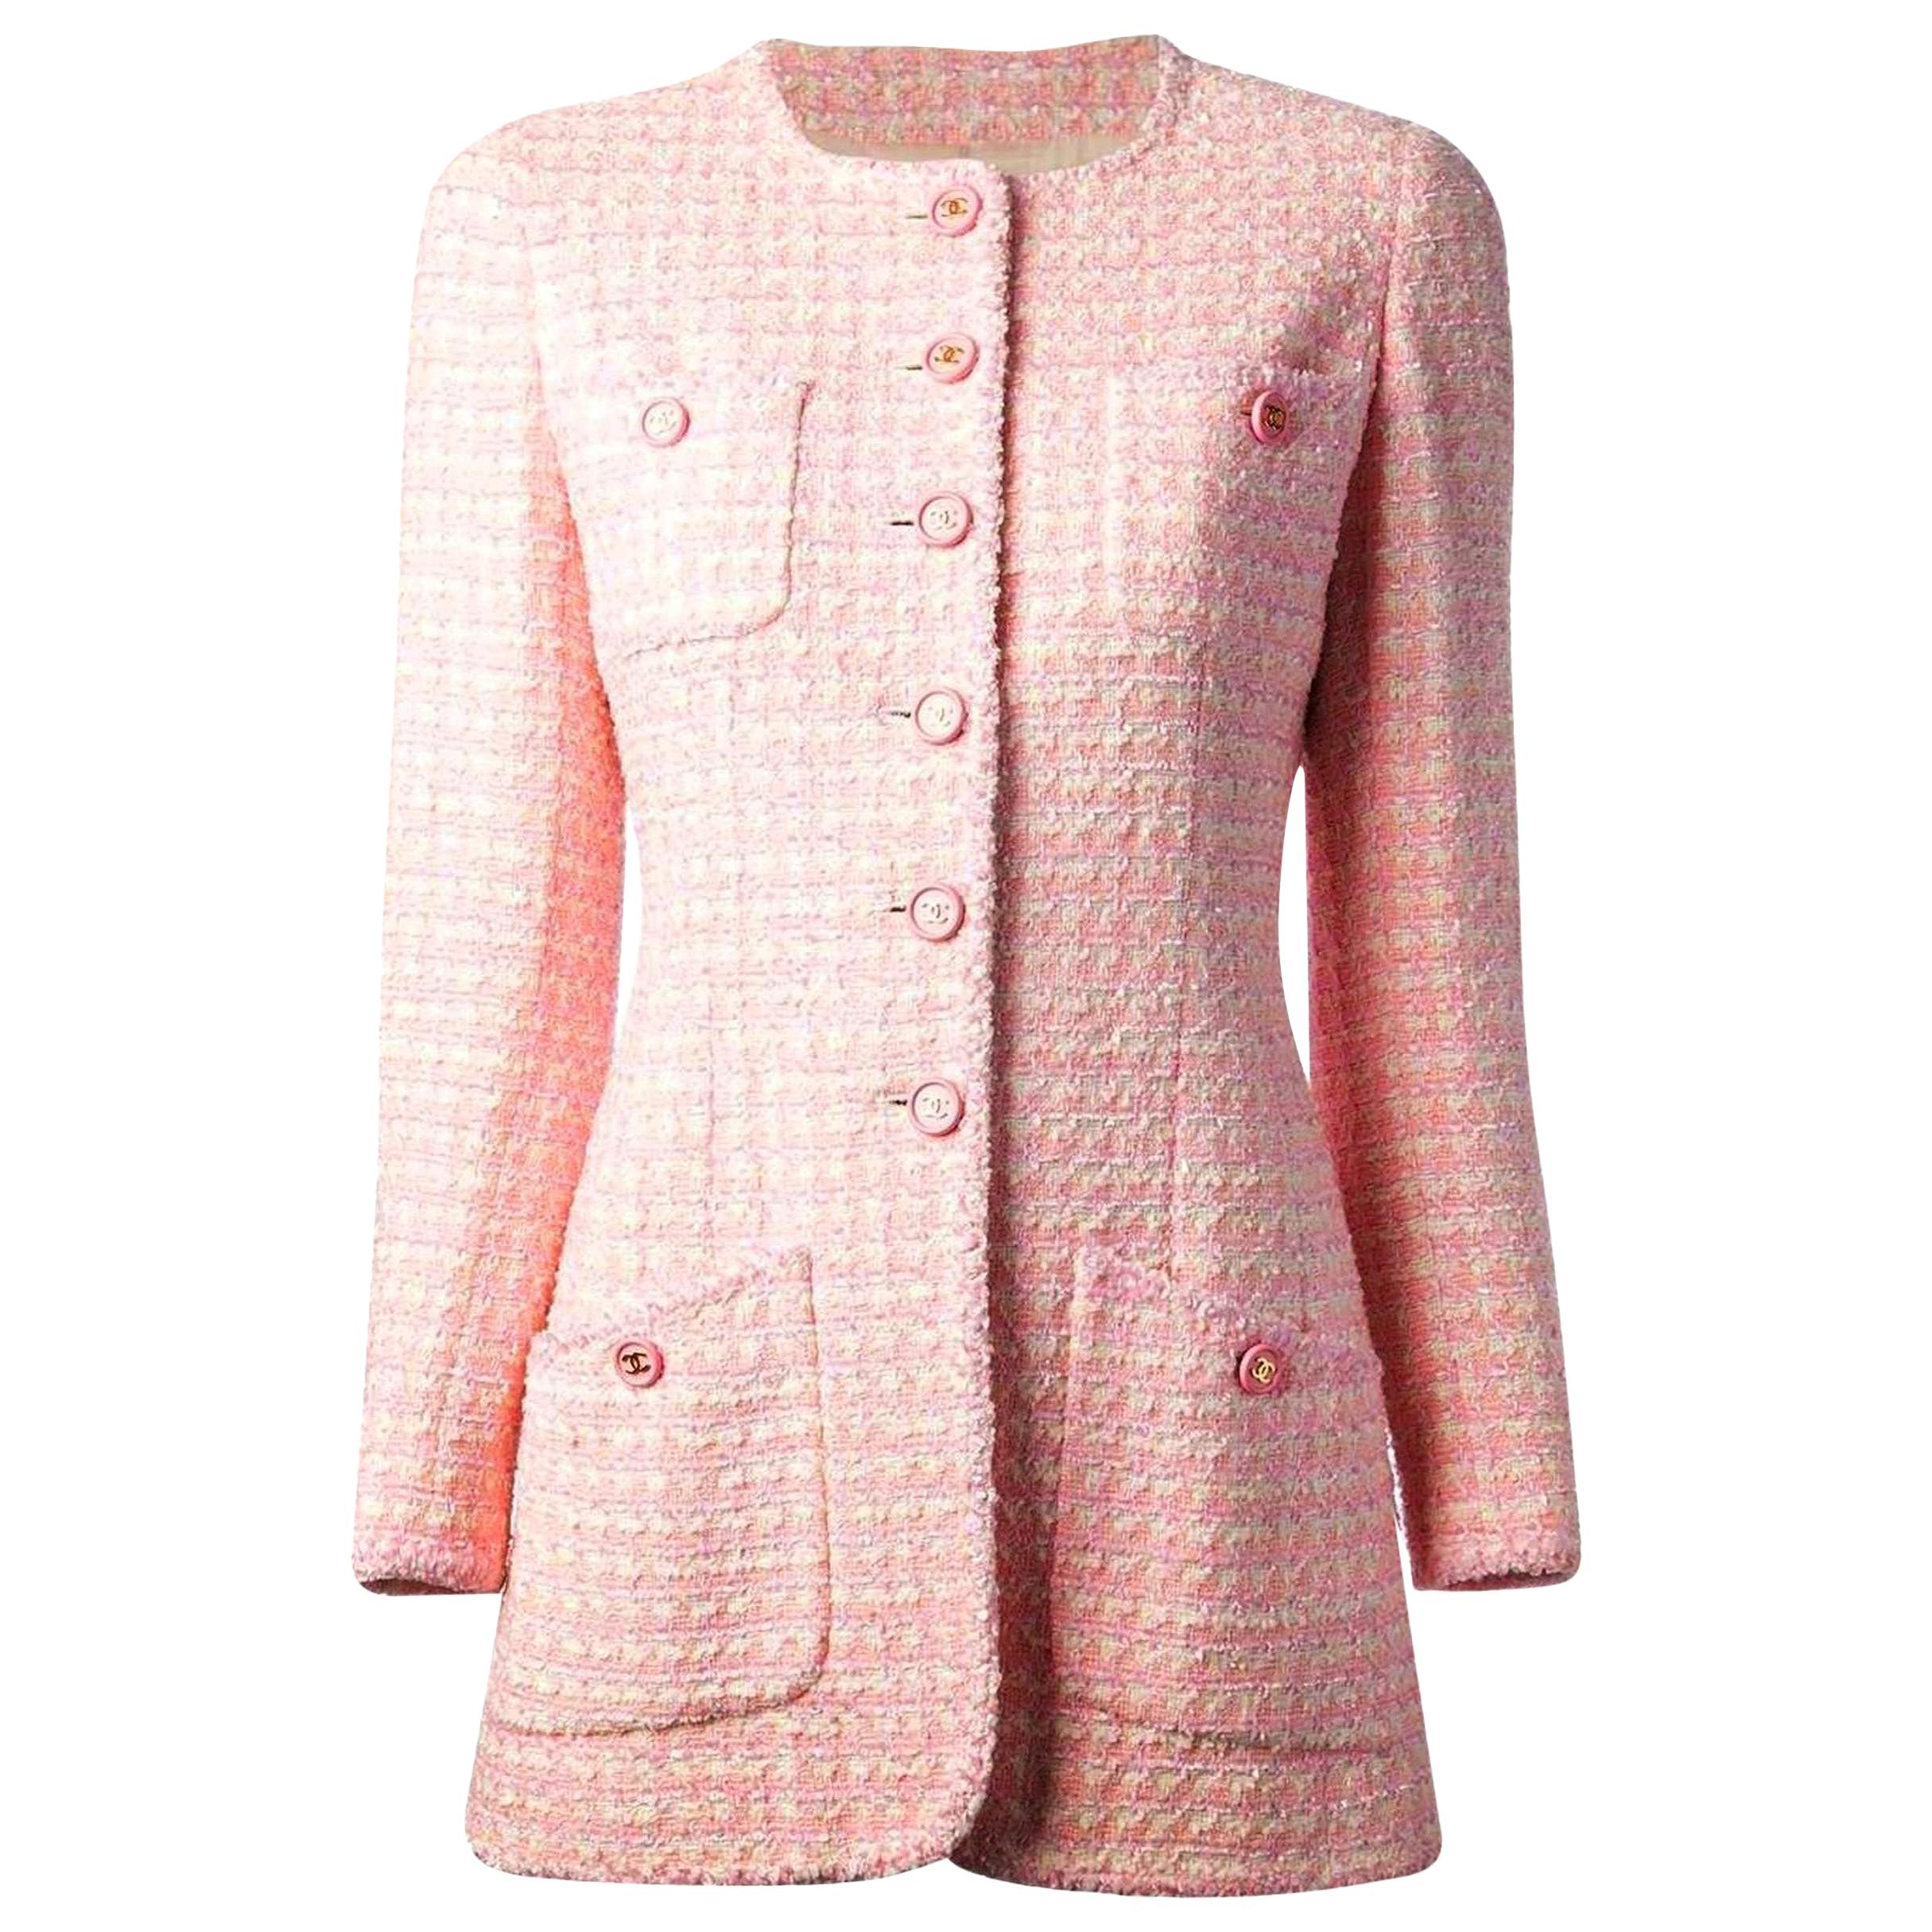 vintage chanel pink blazer